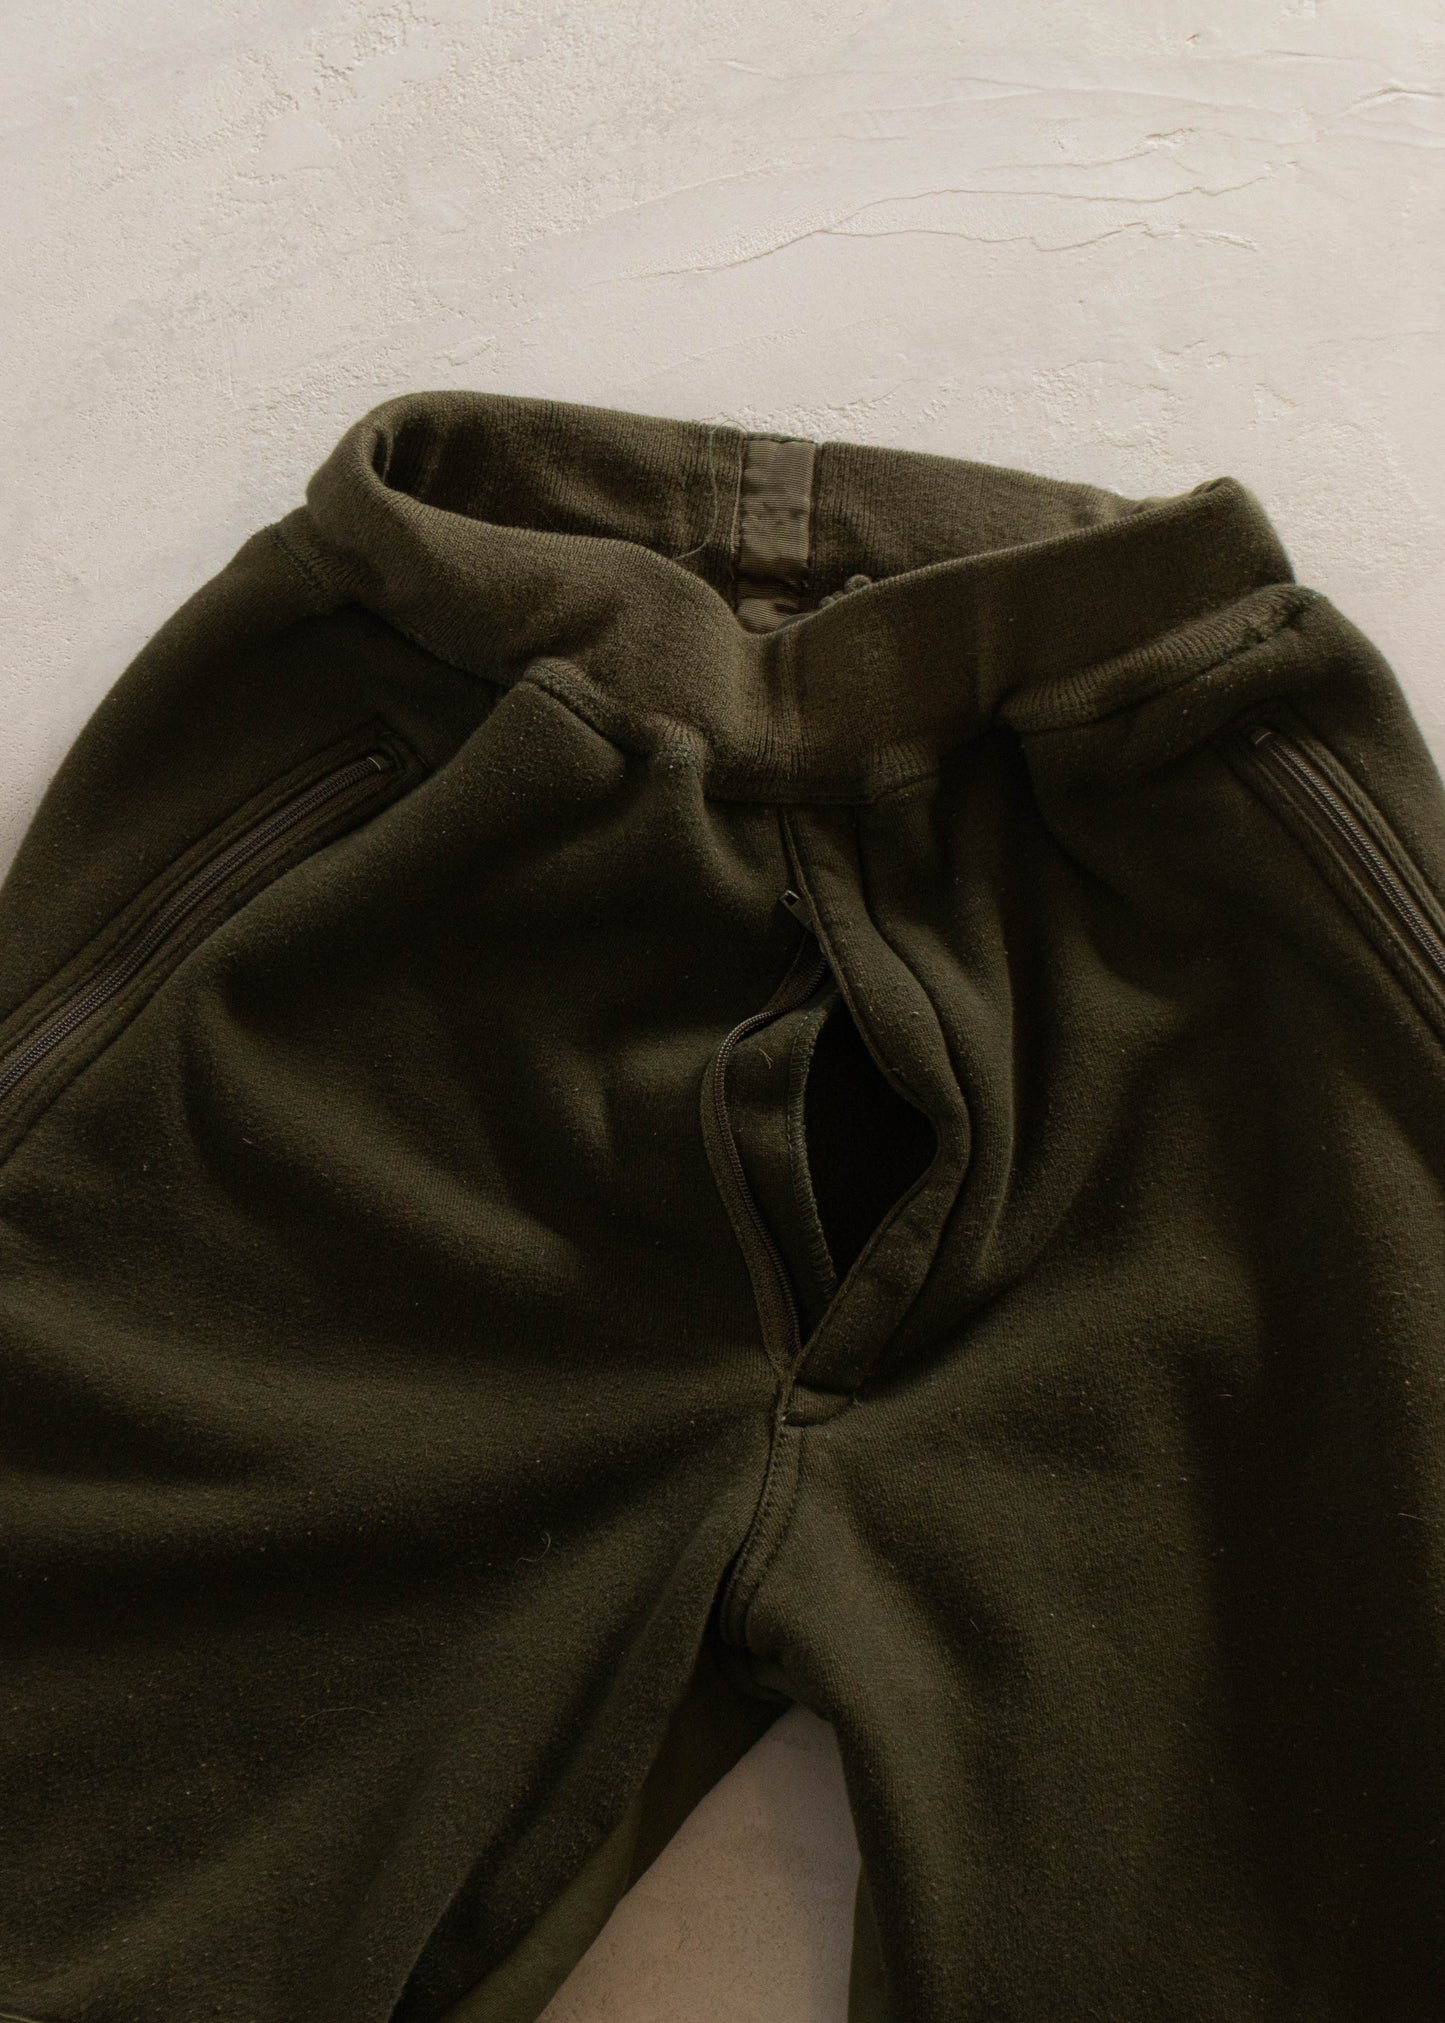 1990s Military Combat Sweatpants Size Women's 27 Men's 30